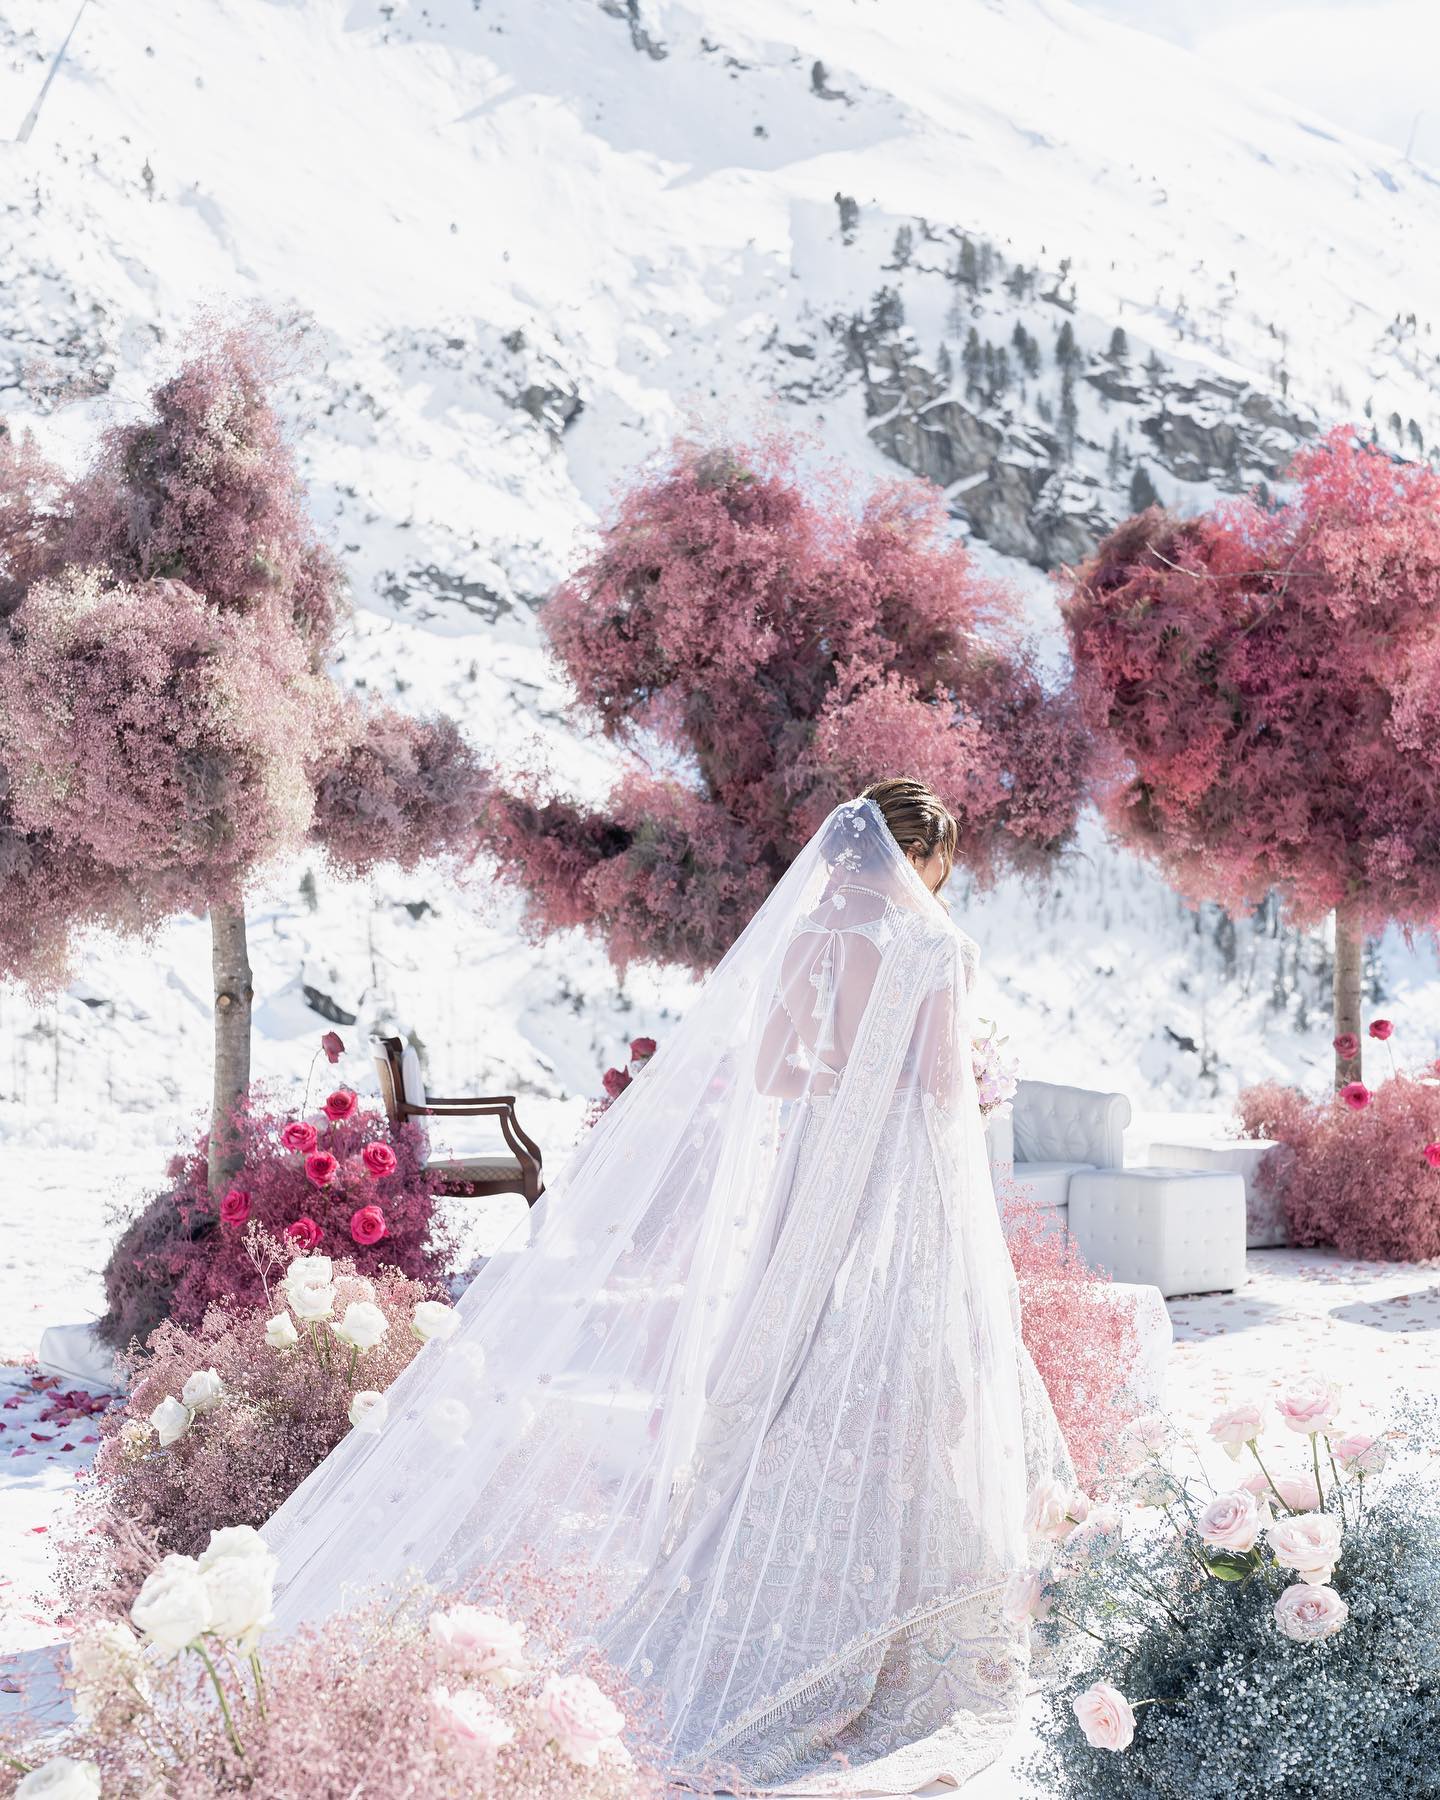 Influencer Sonam Babani’s Scenic Destination Wedding At The Swiss Alps!